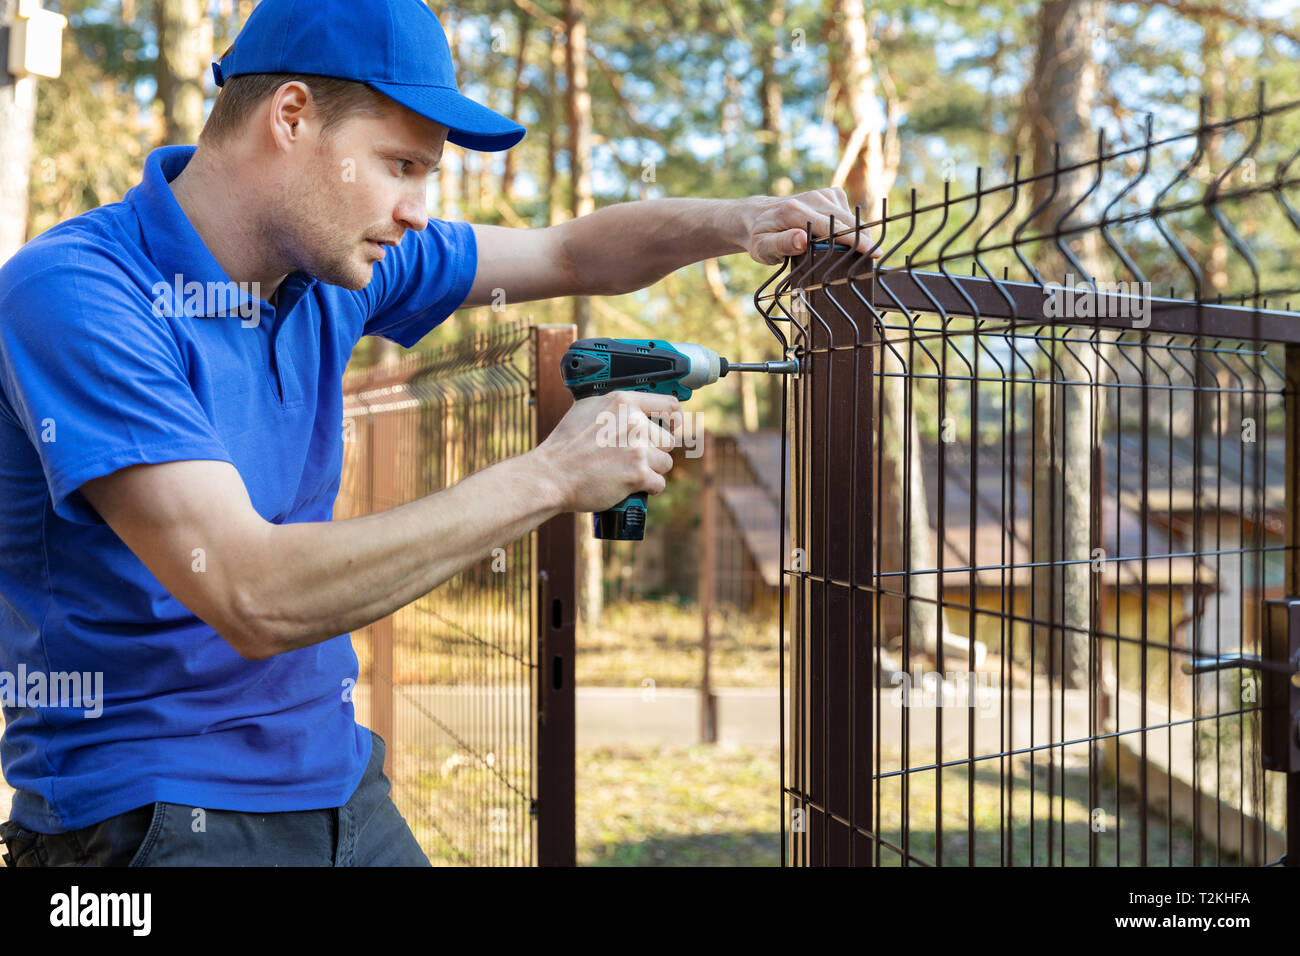 property territory fencing - man screws metal fence panel Stock Photo